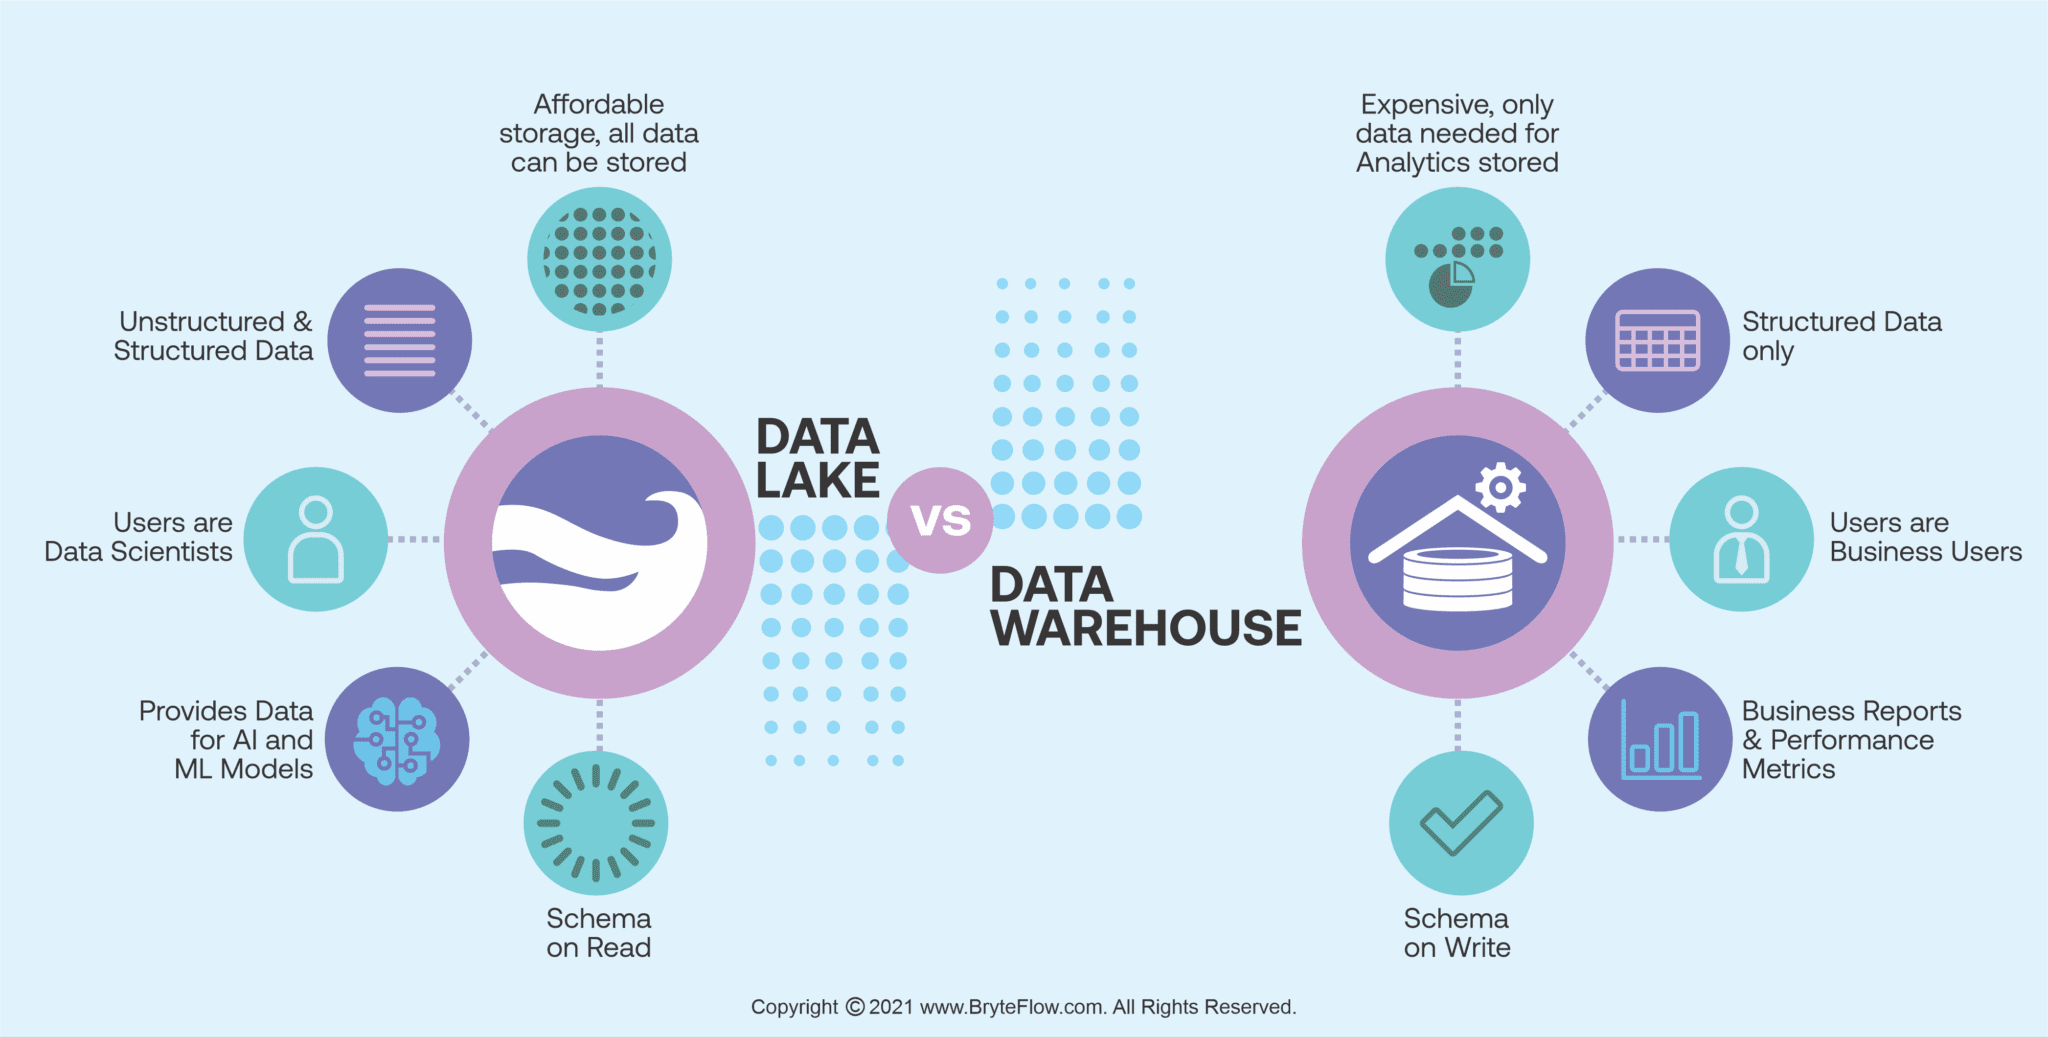 data lake vs data warehouse - Users